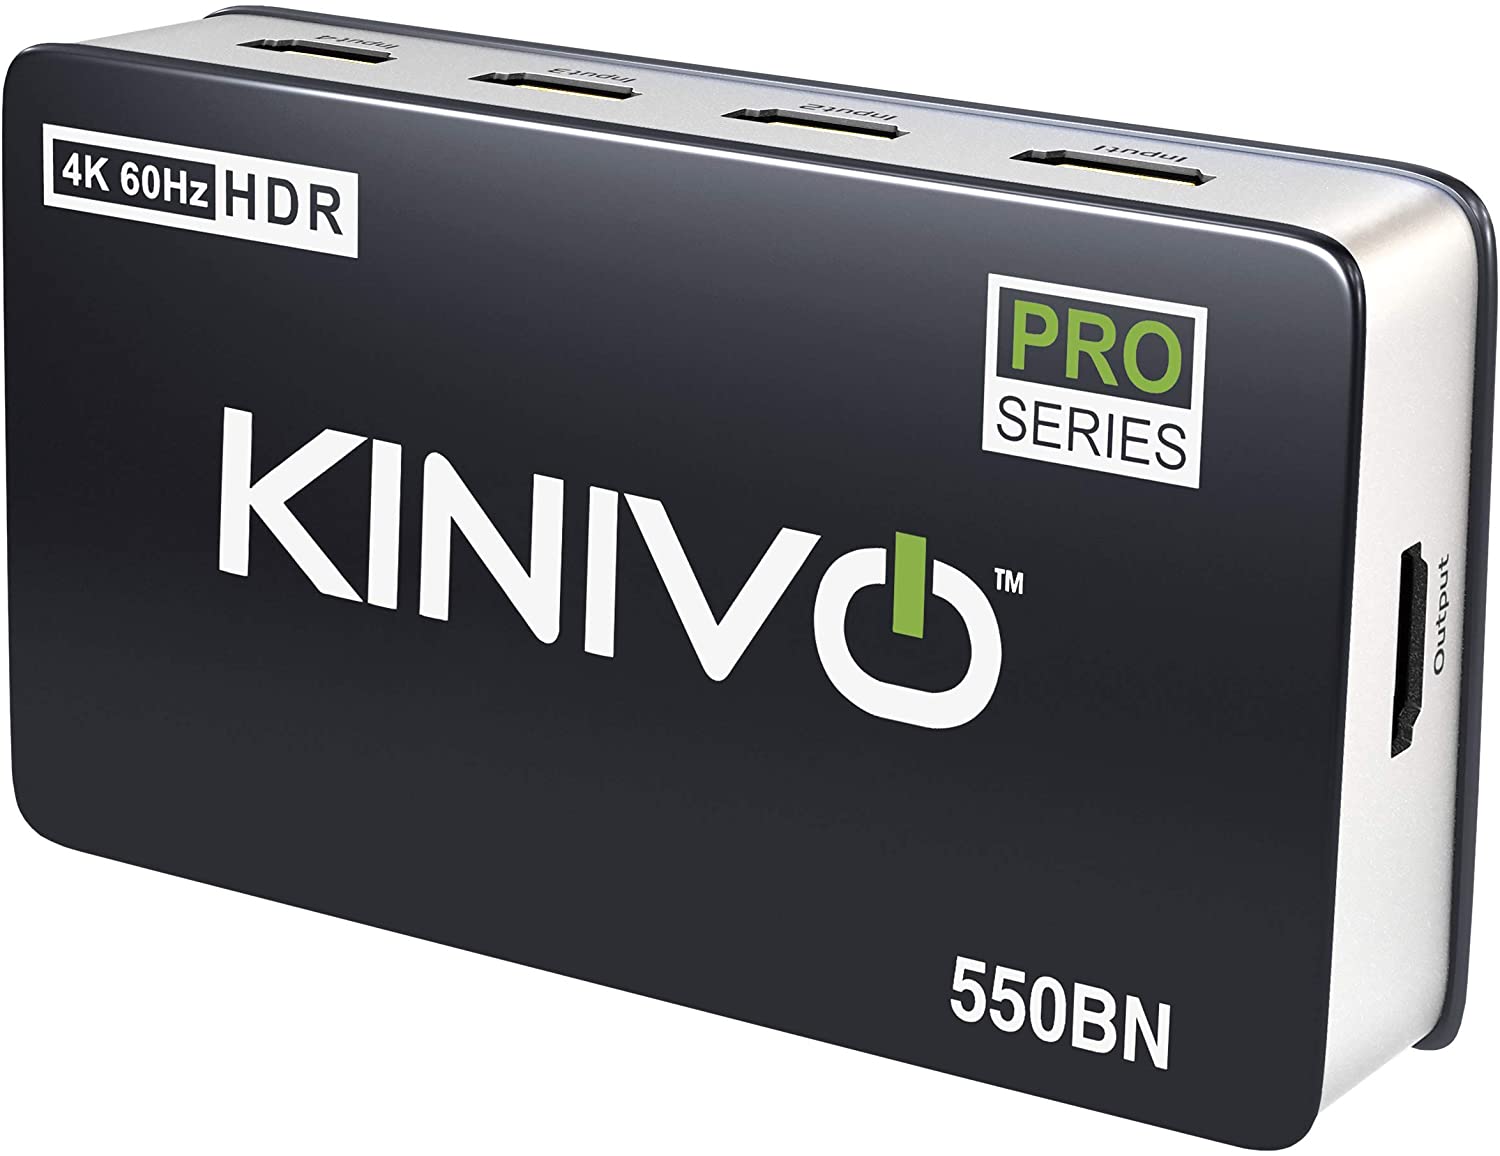 Kinivo 550BN 4K HDMI Automatic Switch With Remote, 5-Port